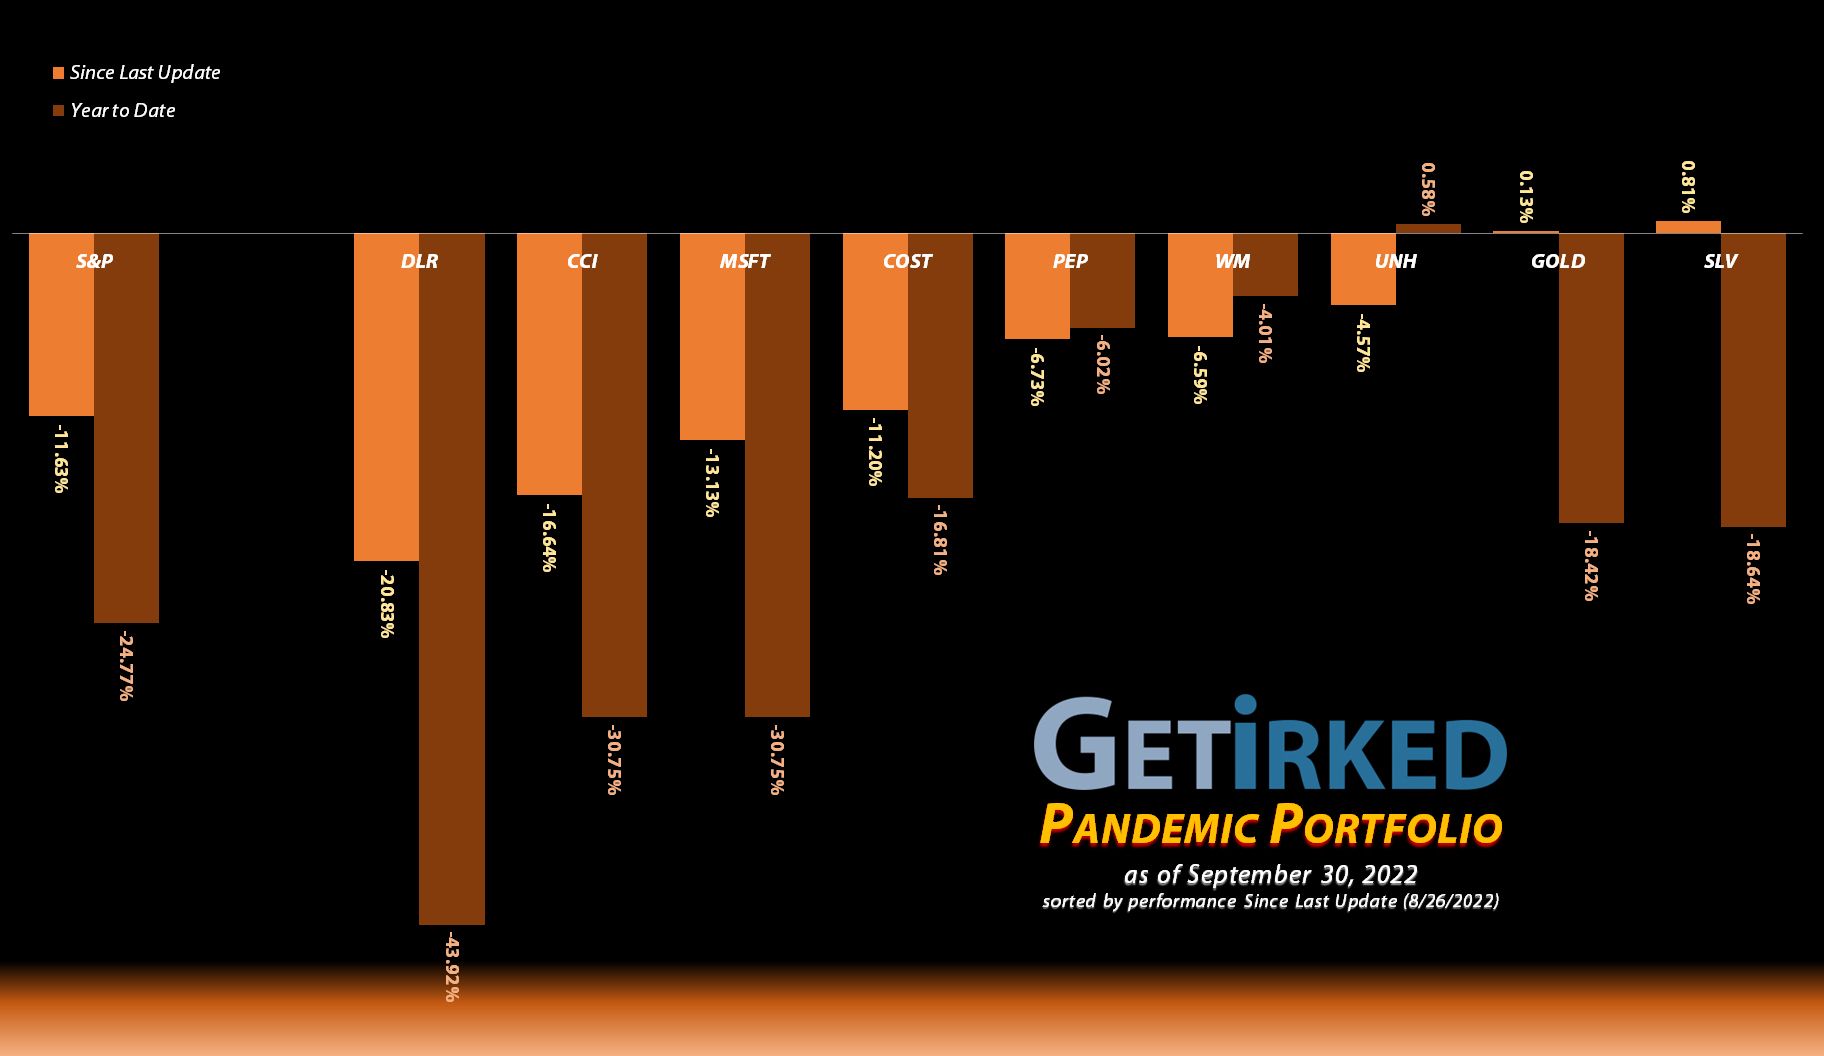 Get Irked - Pandemic Portfolio - September 30, 2022